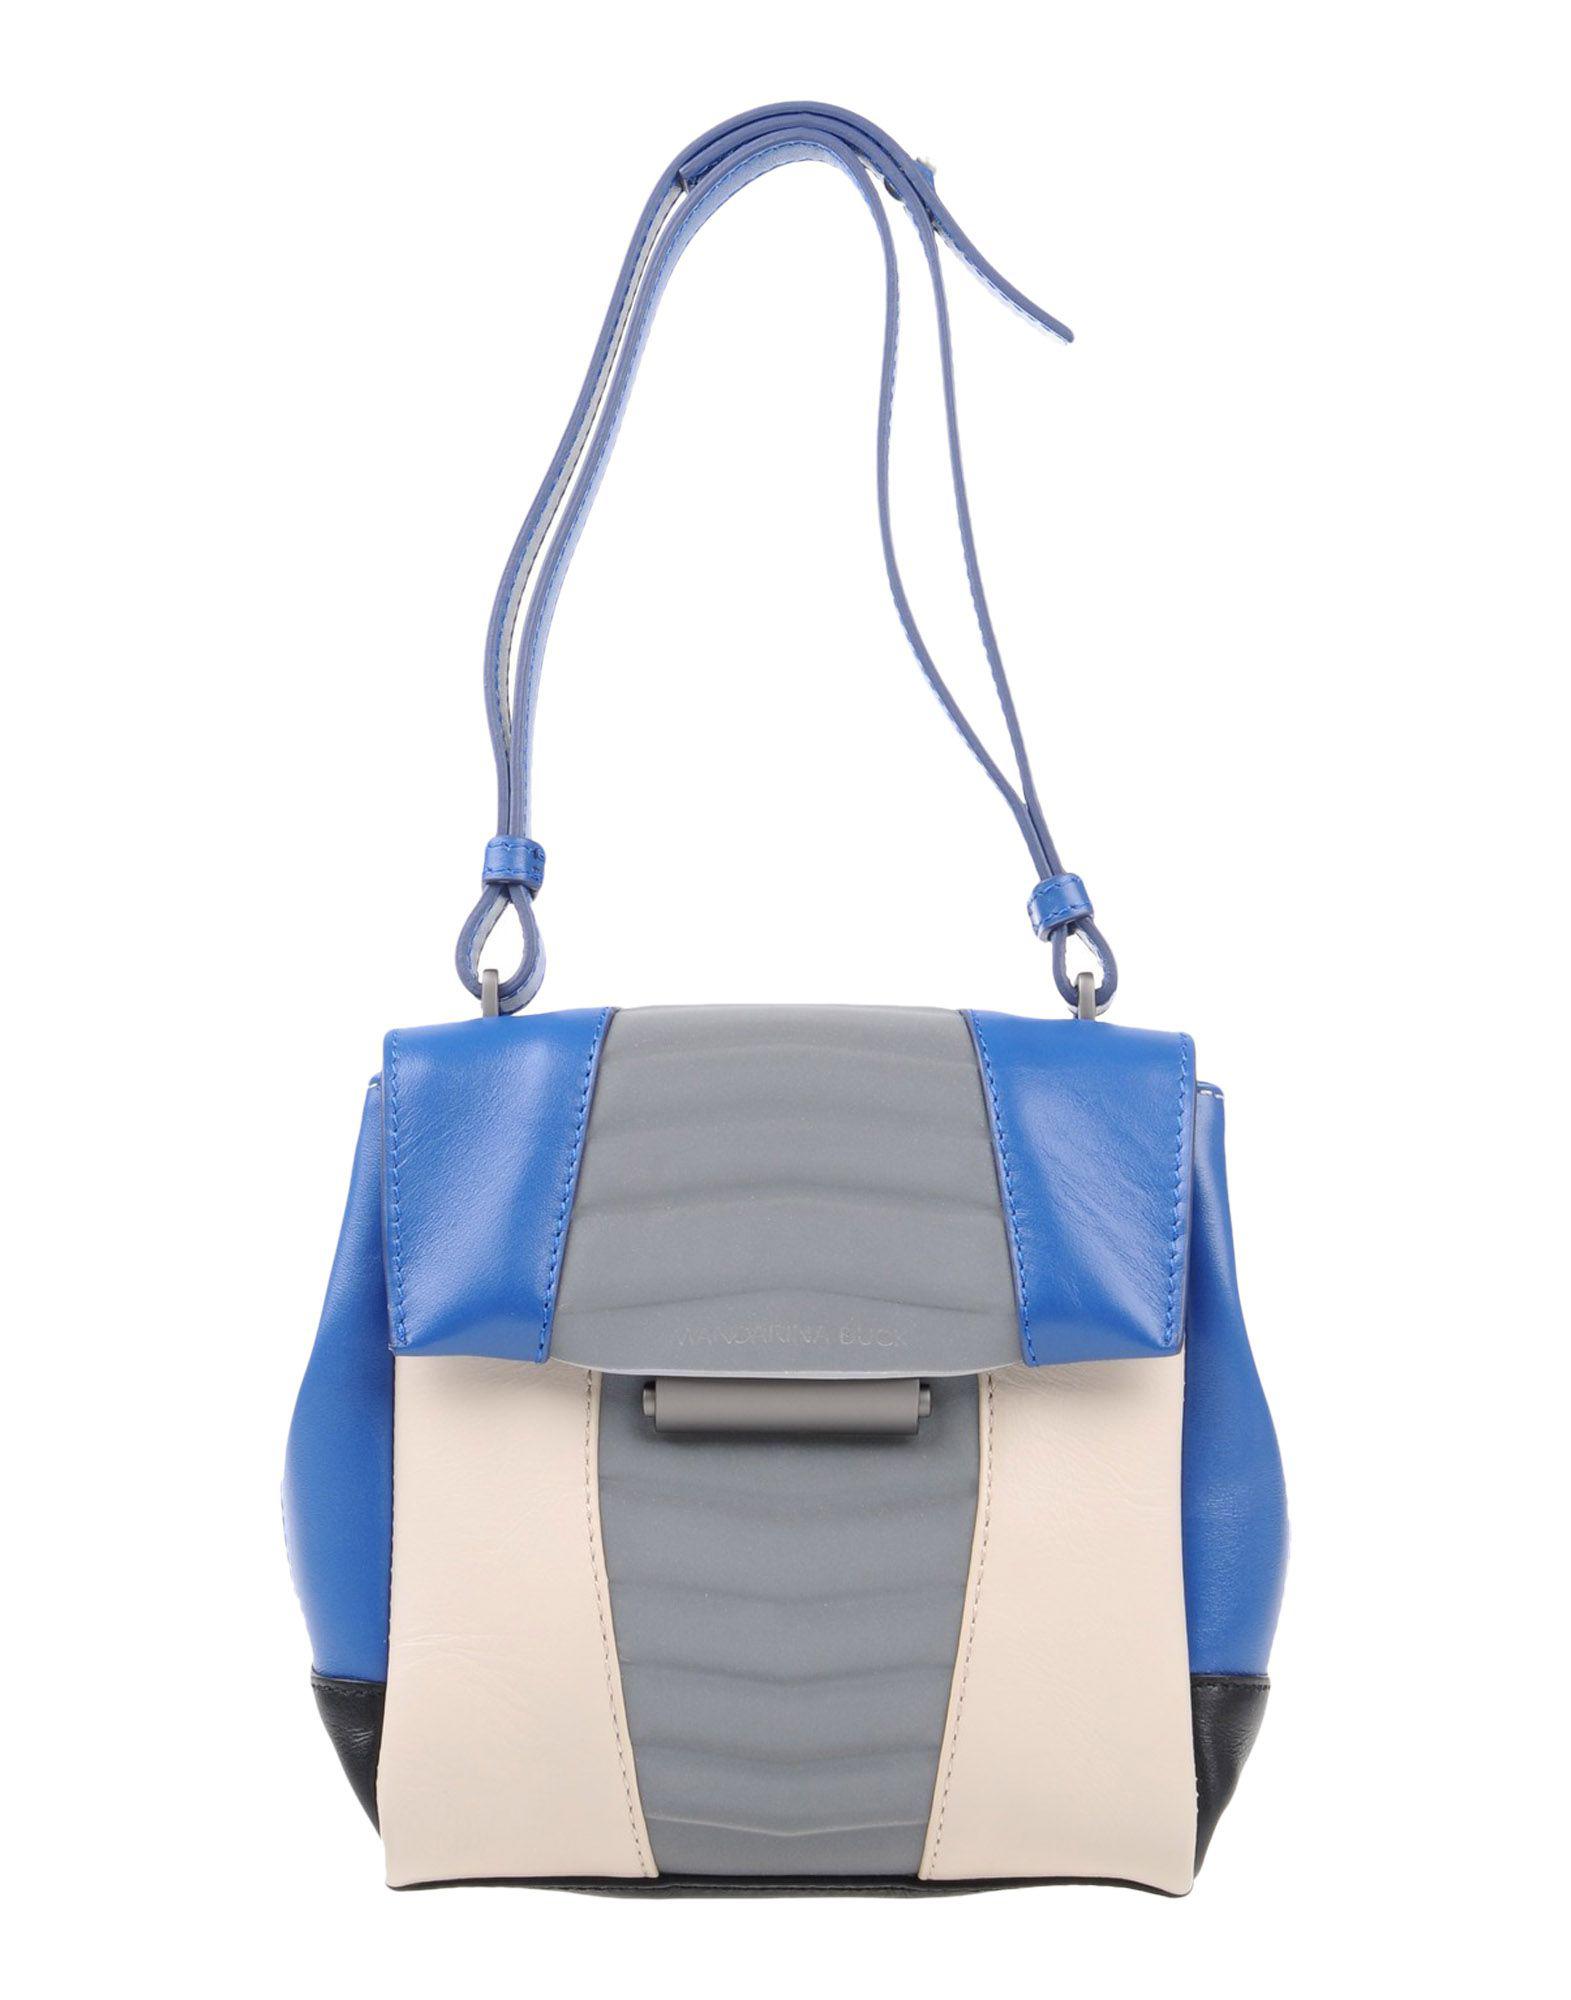 Mandarina Duck Leather Handbag in Blue - Lyst